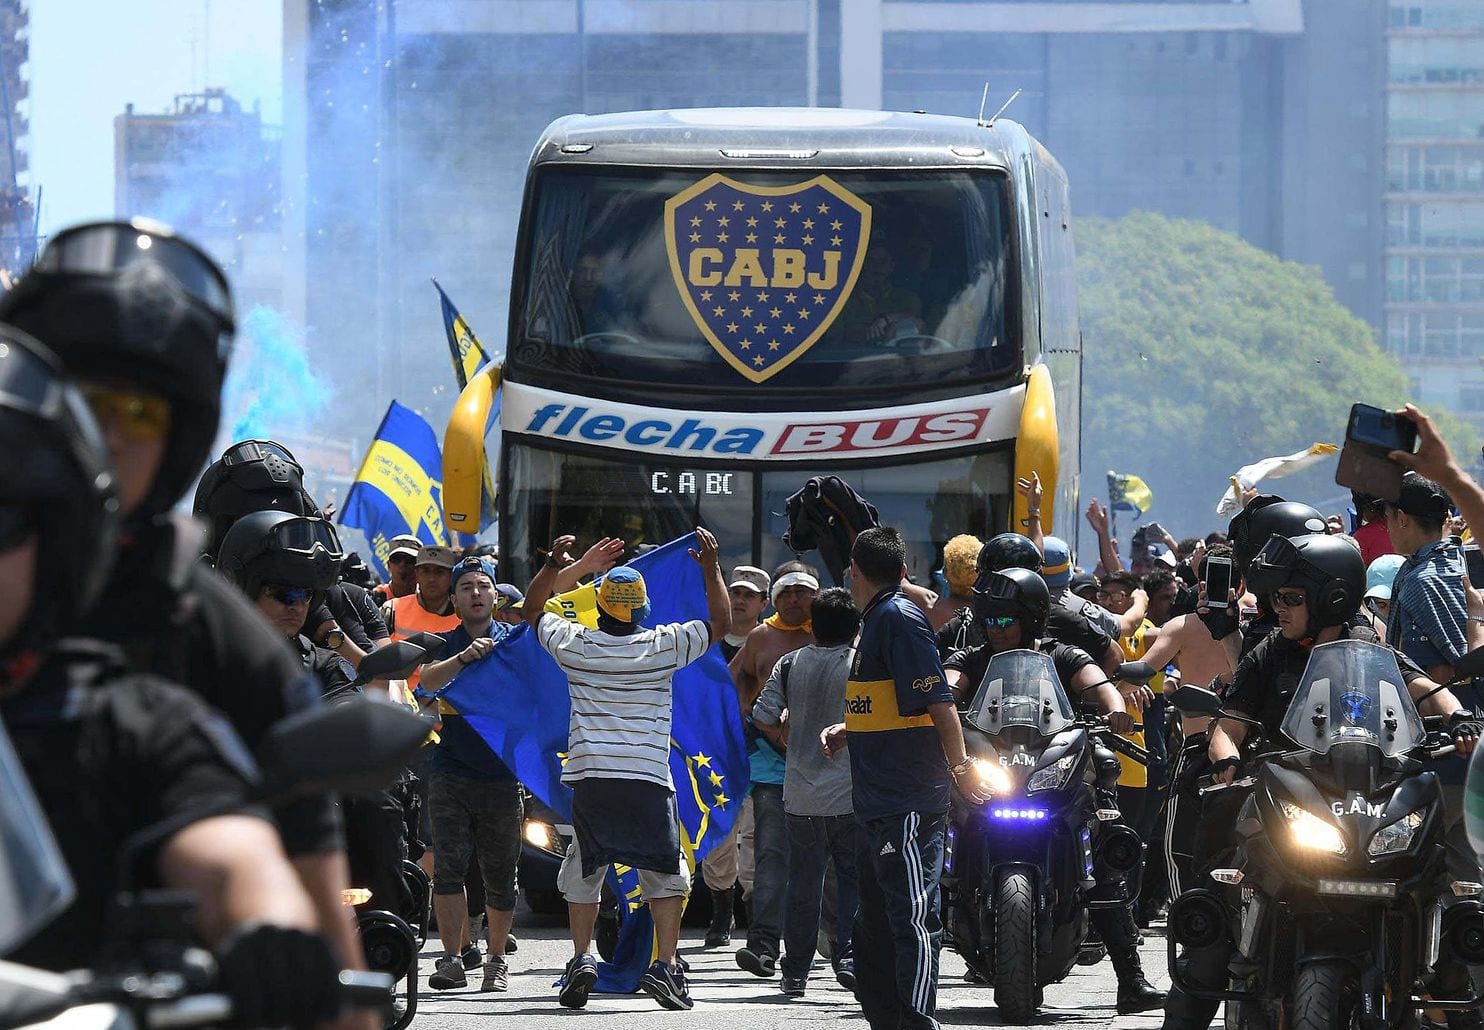 Copa Libertadores Final Postponed After River Plate Fans Attacked Boca Juniors Team Bus